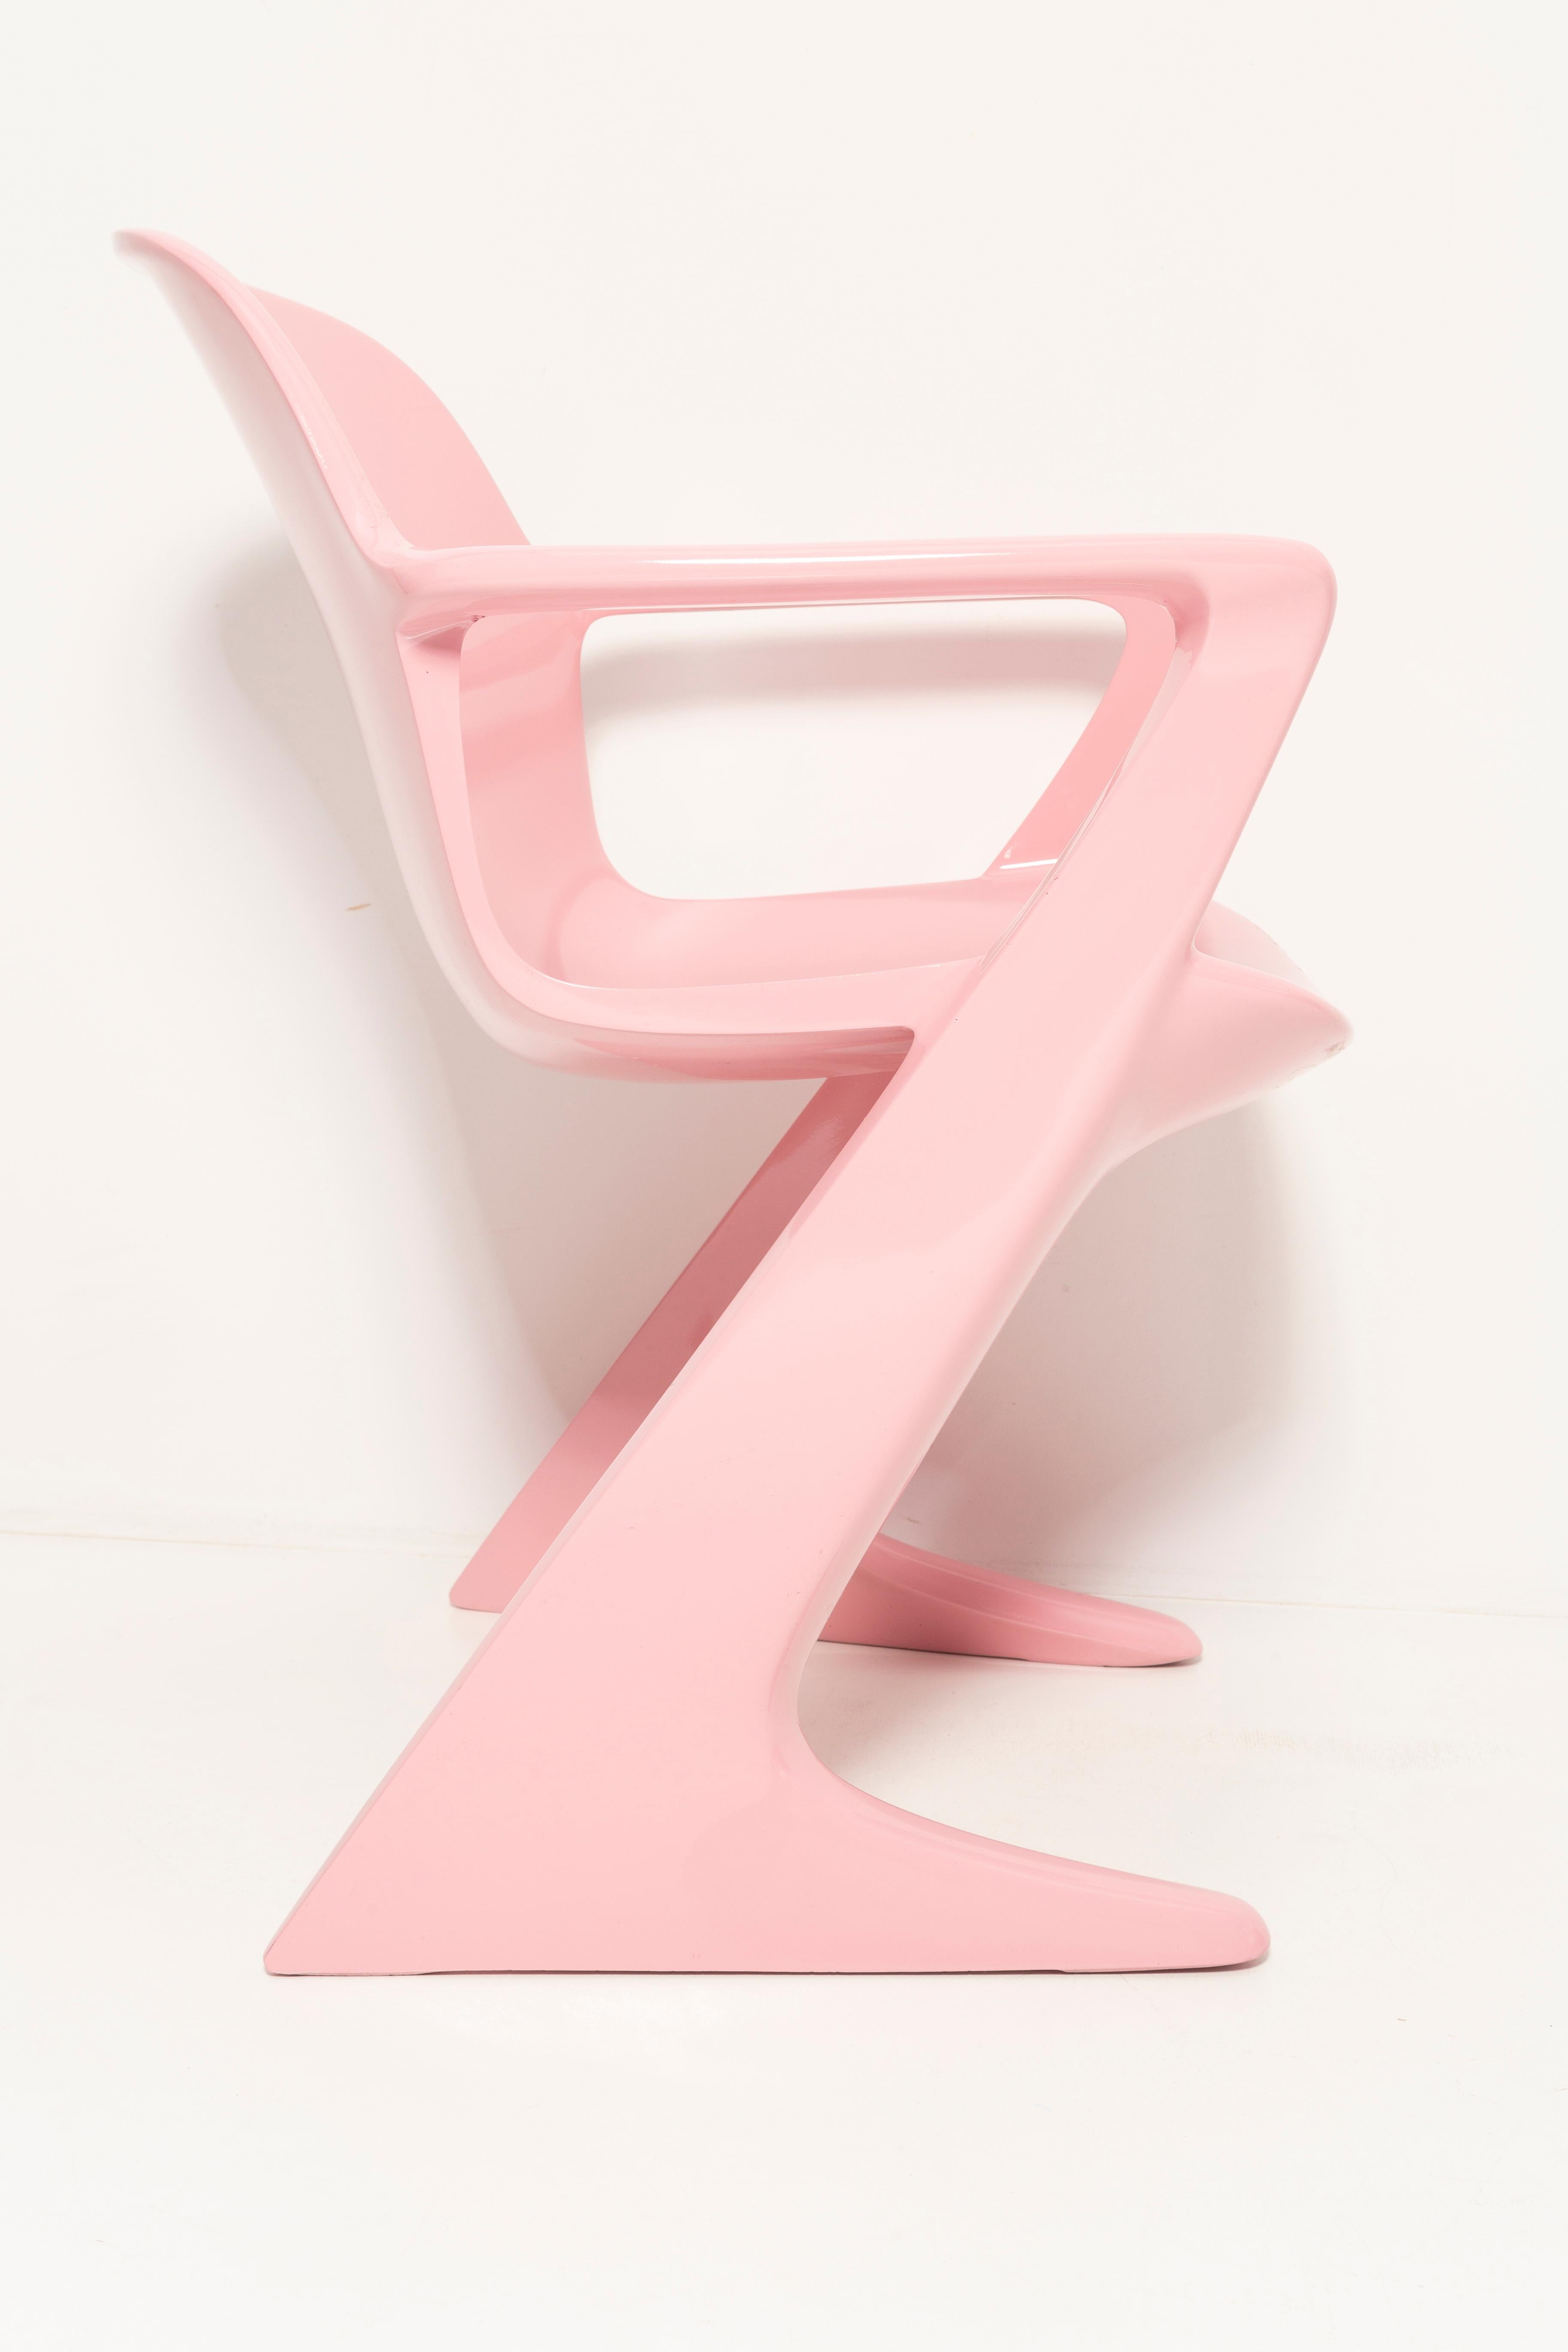 Fiberglass Mid-Century Light Pink Kangaroo Chair Designed by Ernst Moeckl, Germany, 1968 For Sale